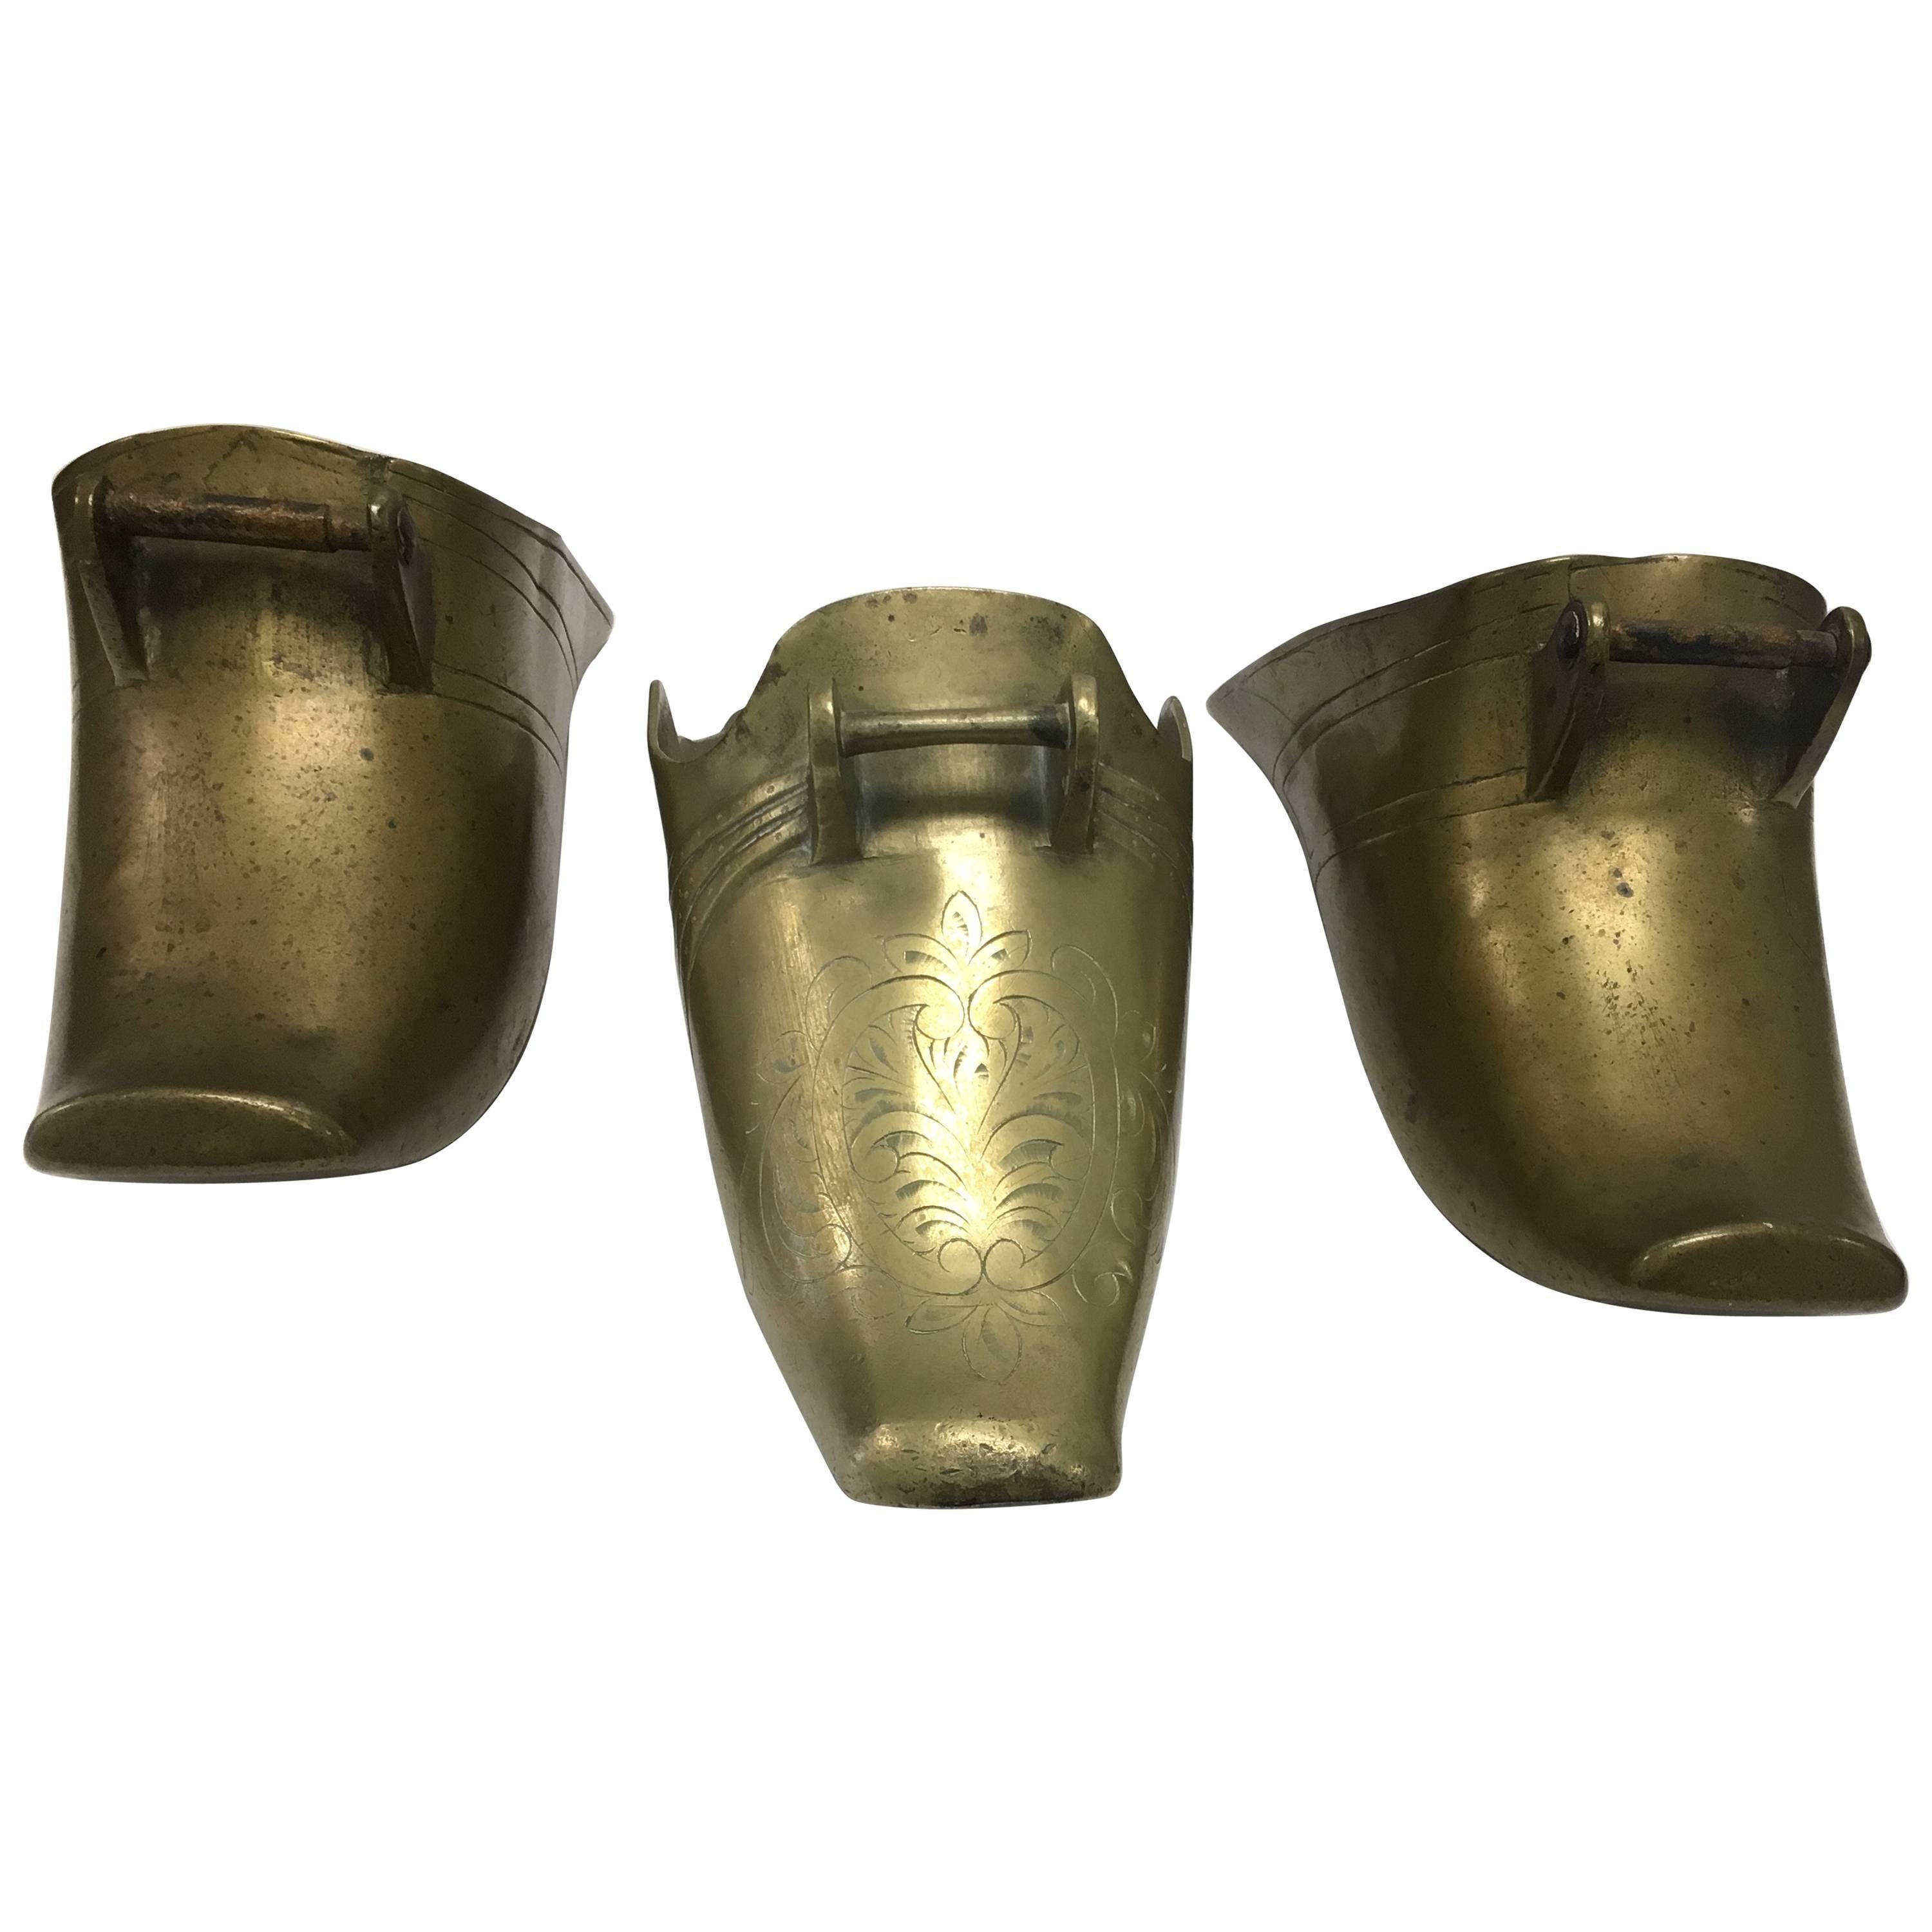  19th Century Spanish Colonial Conquistador Brass Stirrups, Set of Three